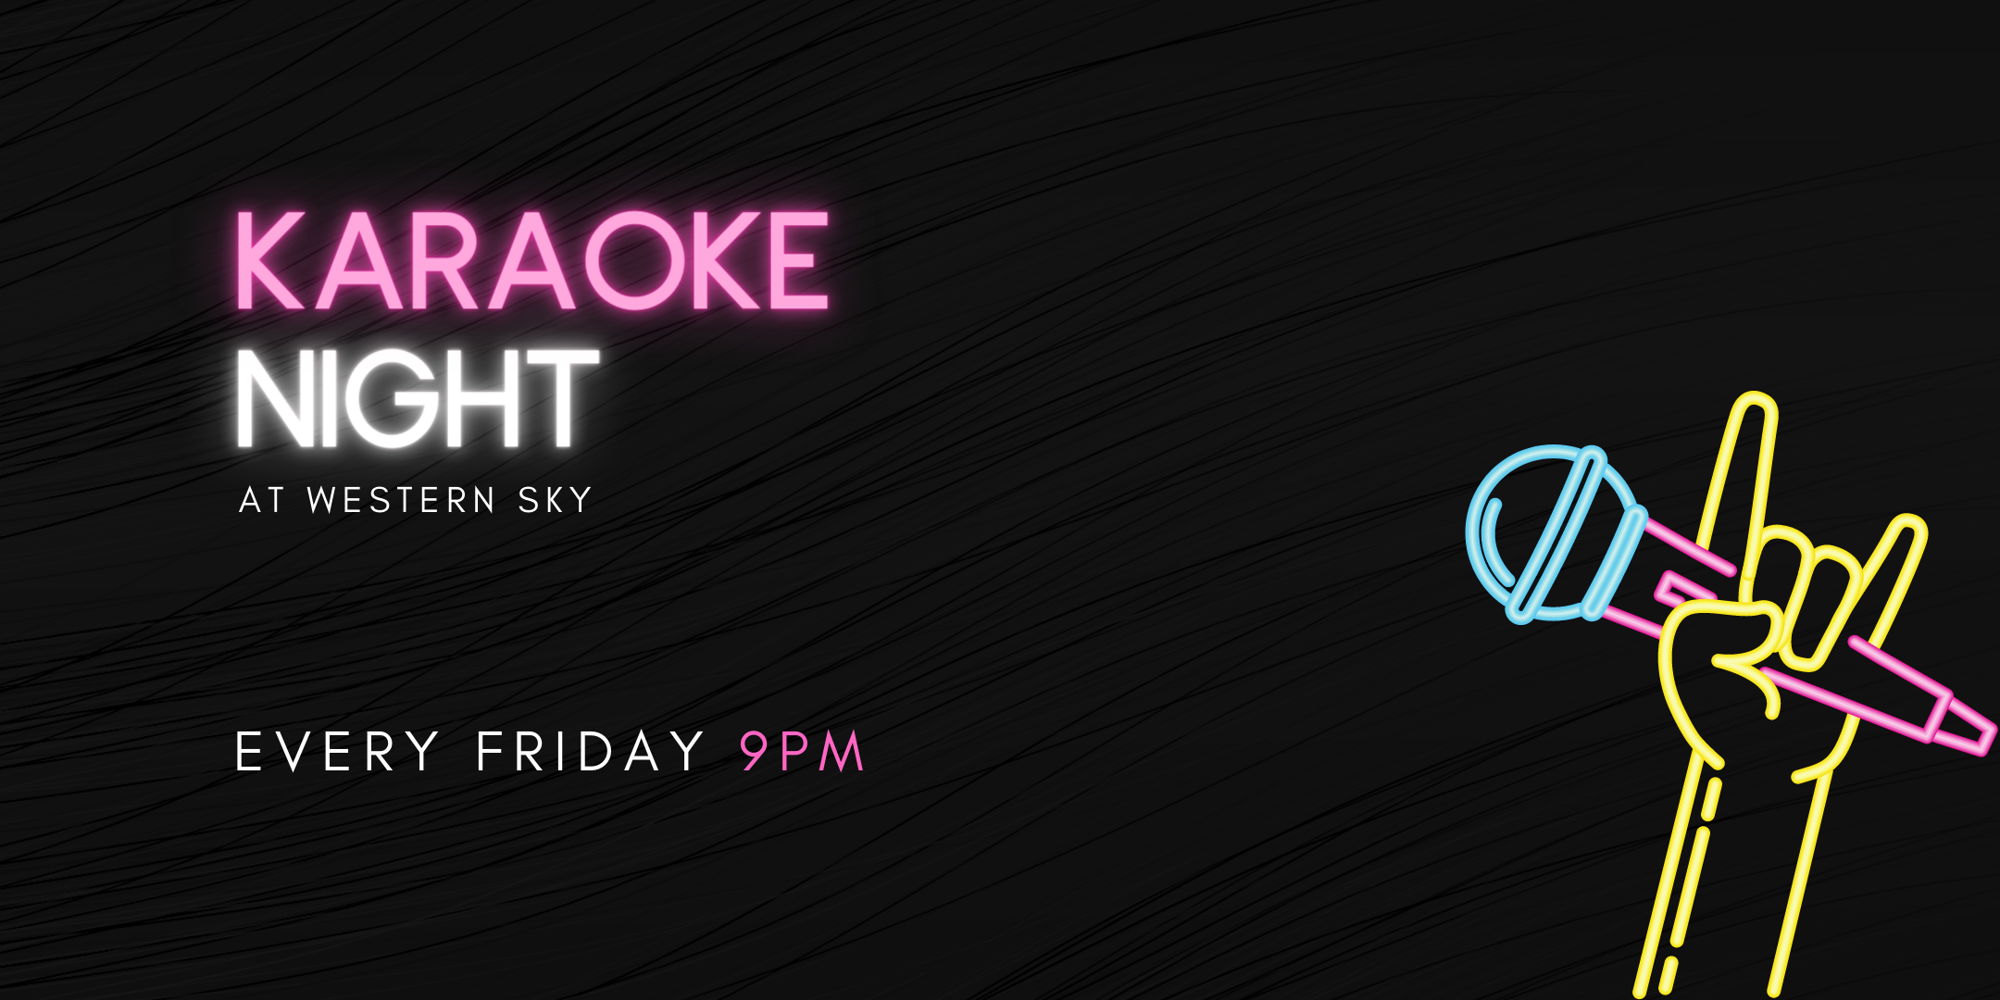 Karaoke Night at Western Sky promotional image